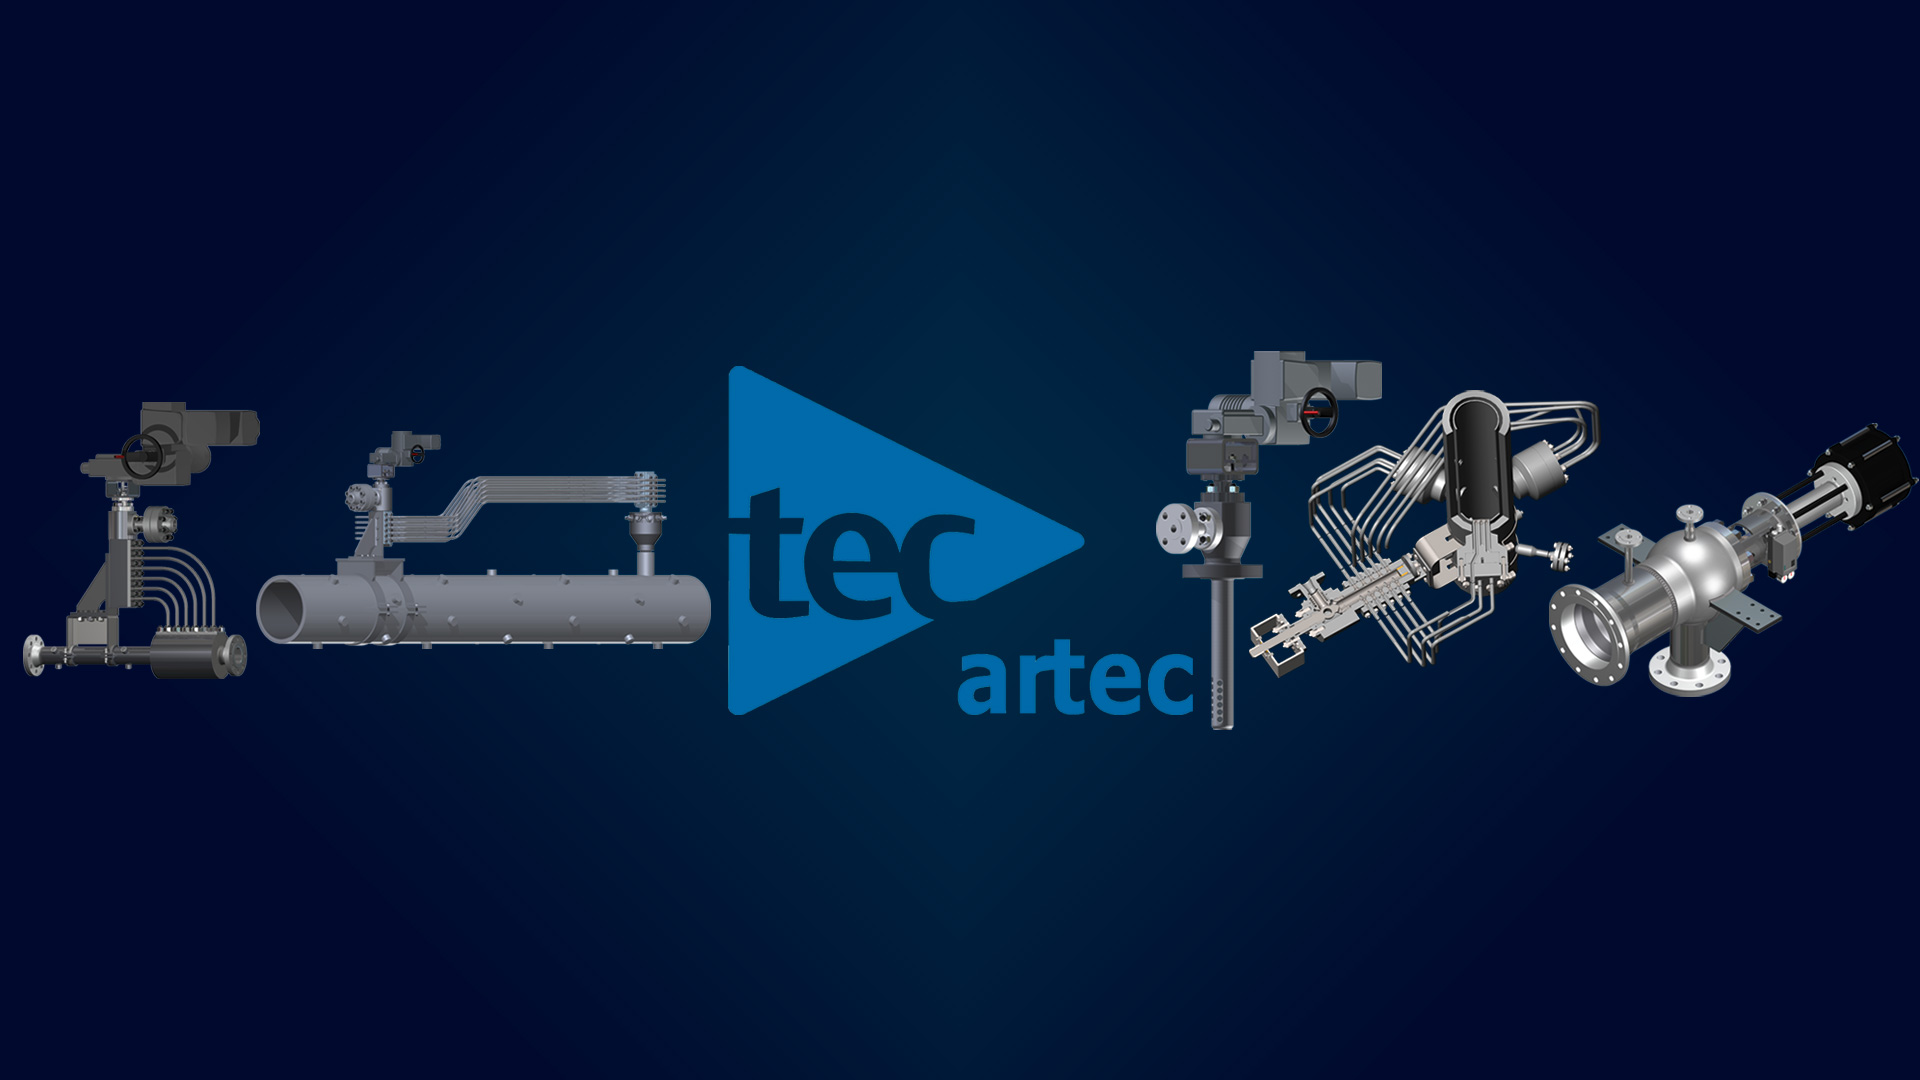 TEC artec top banner steam conditioning